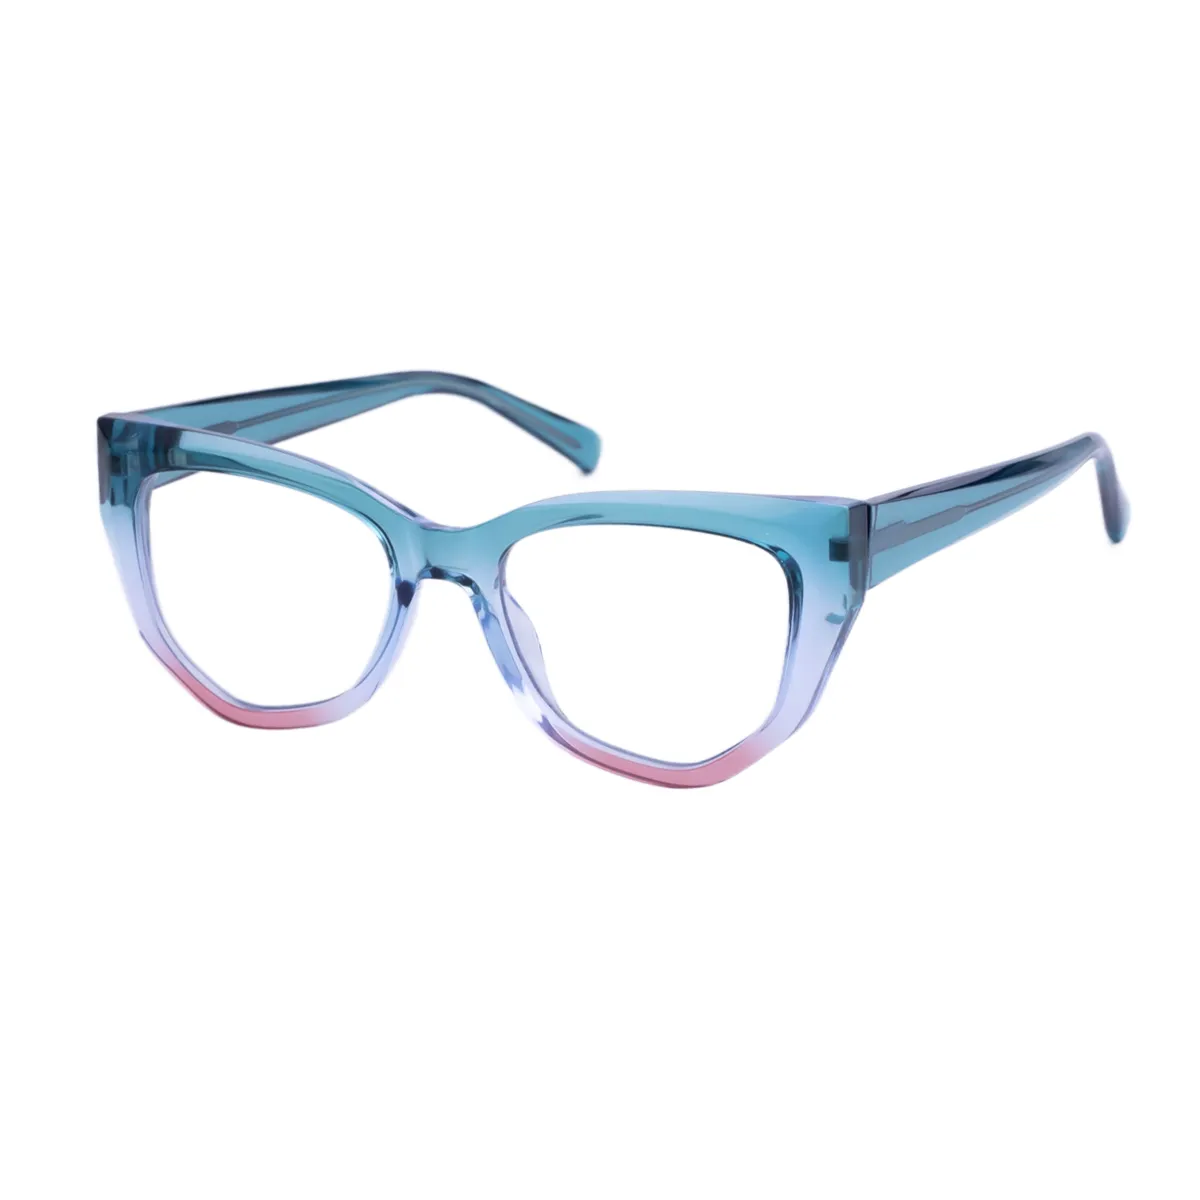 Fashion Geometric Tortoiseshell Glasses for Women